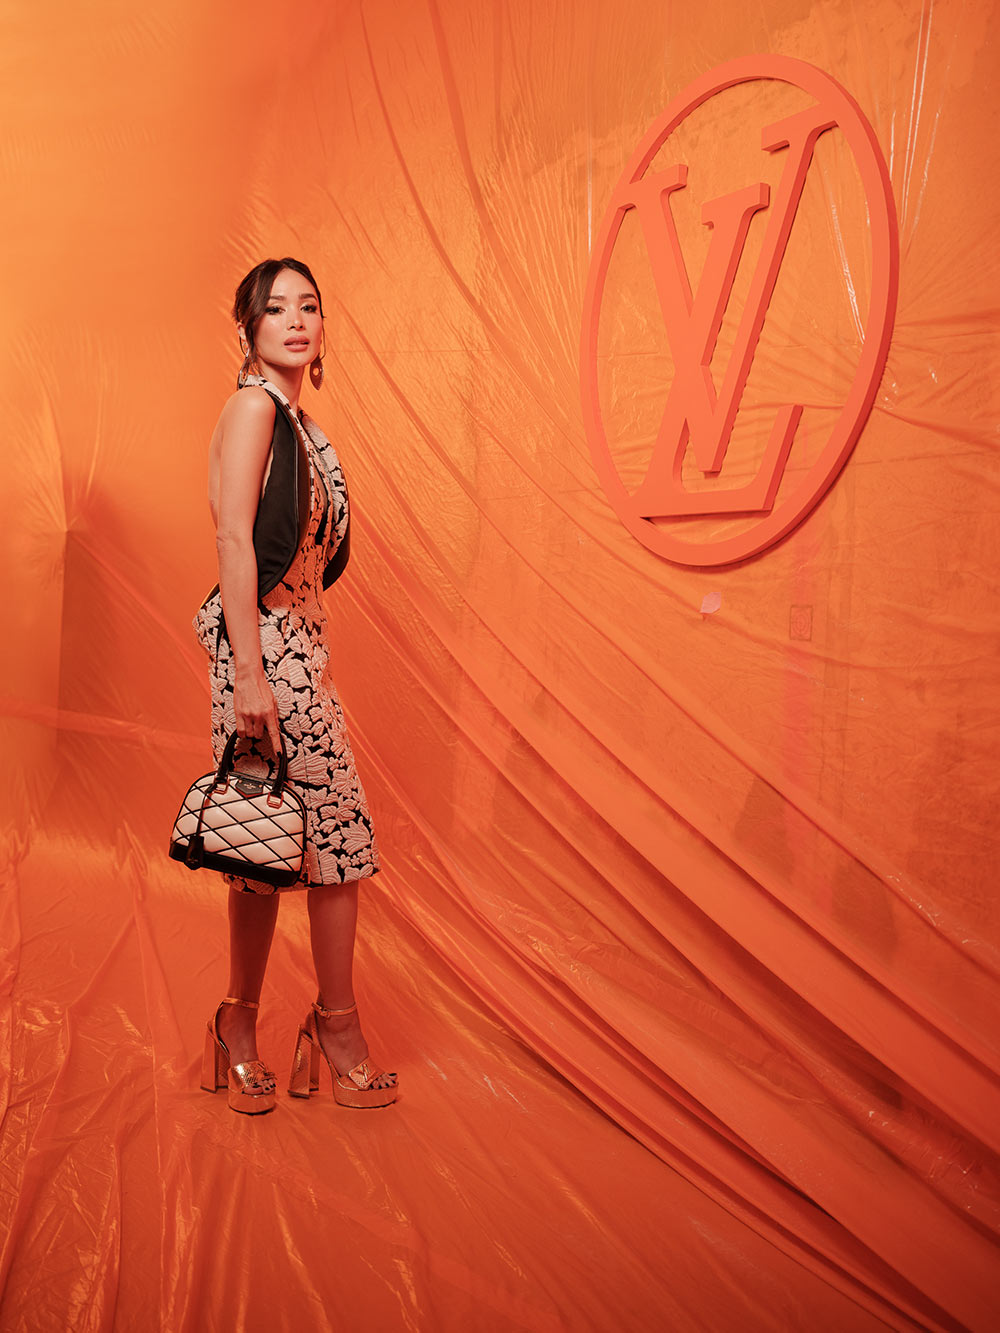 Louis Vuitton mirrored heart pouch. #heart #mirror #styletips #fashion